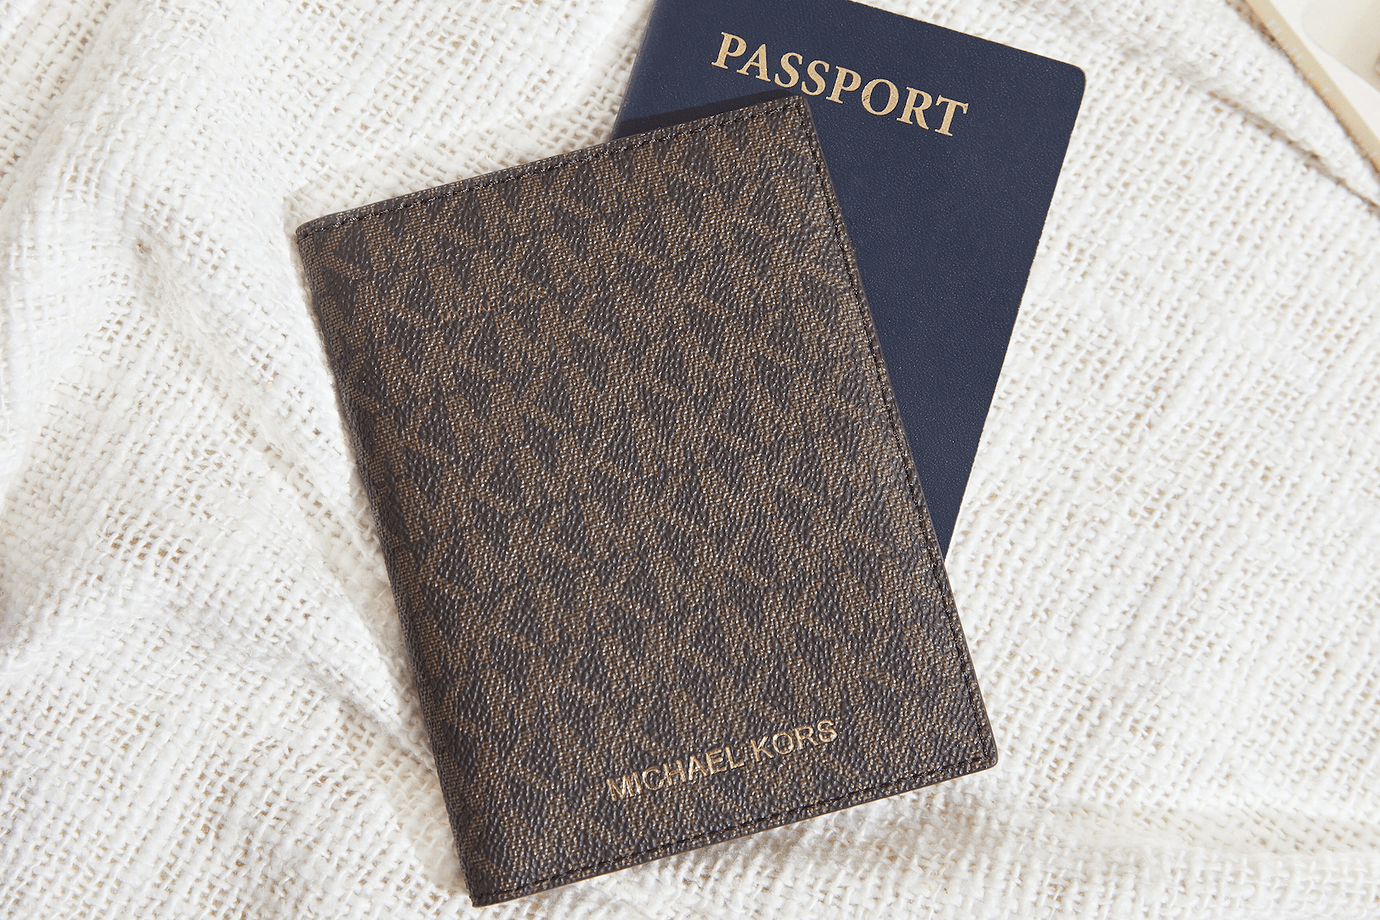 michael kors passport cover